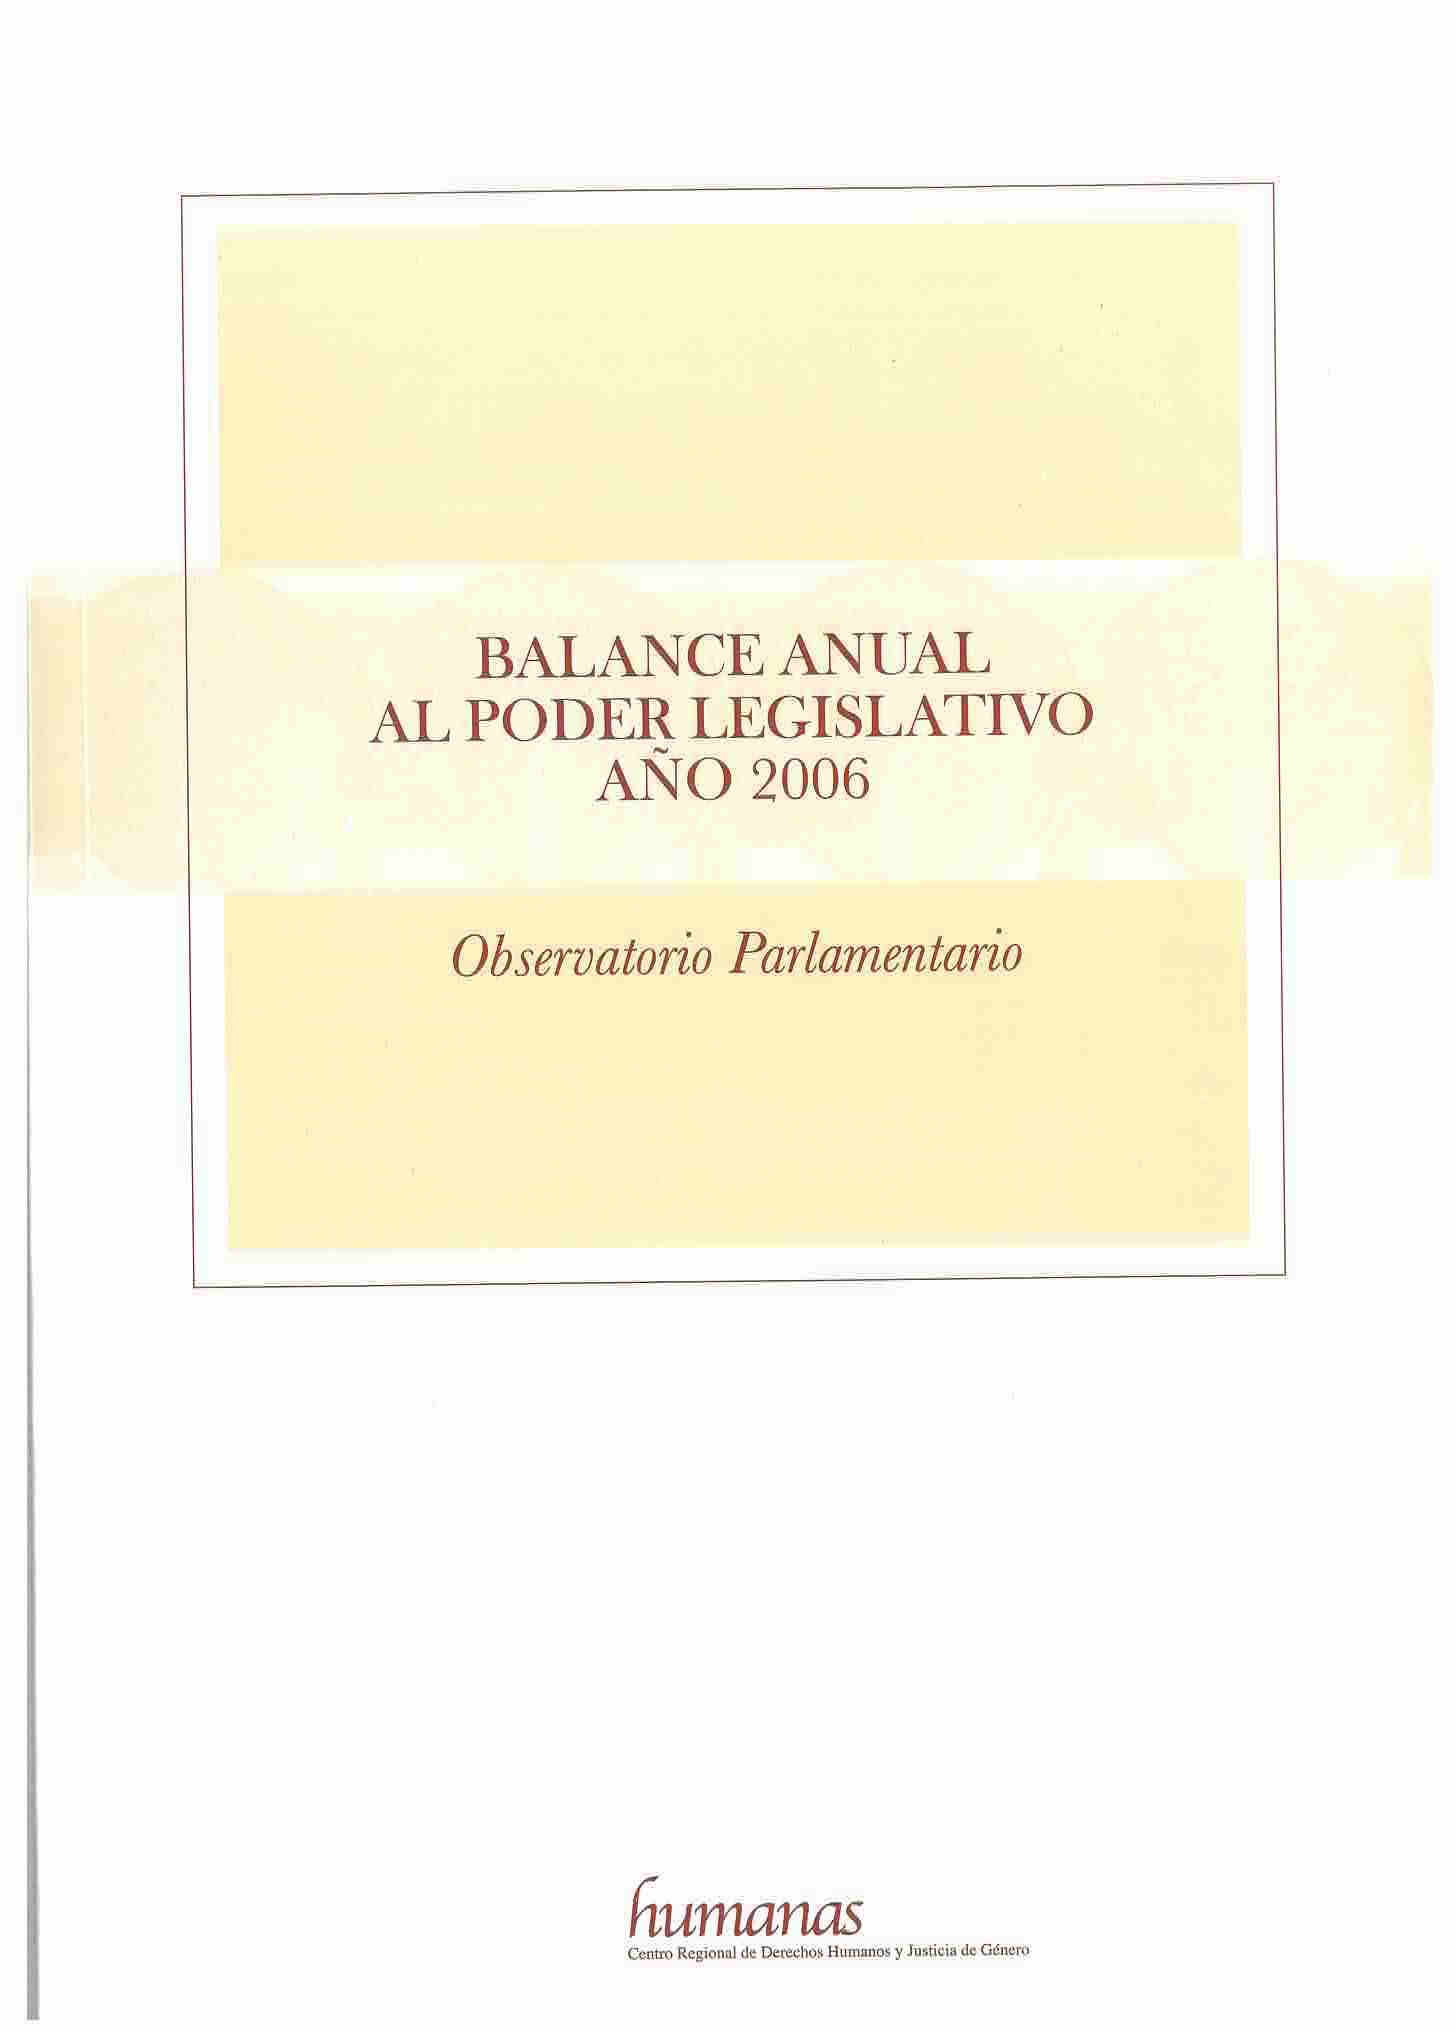 Balance anual al poder legislativo año 2006. observatorio parlamentario